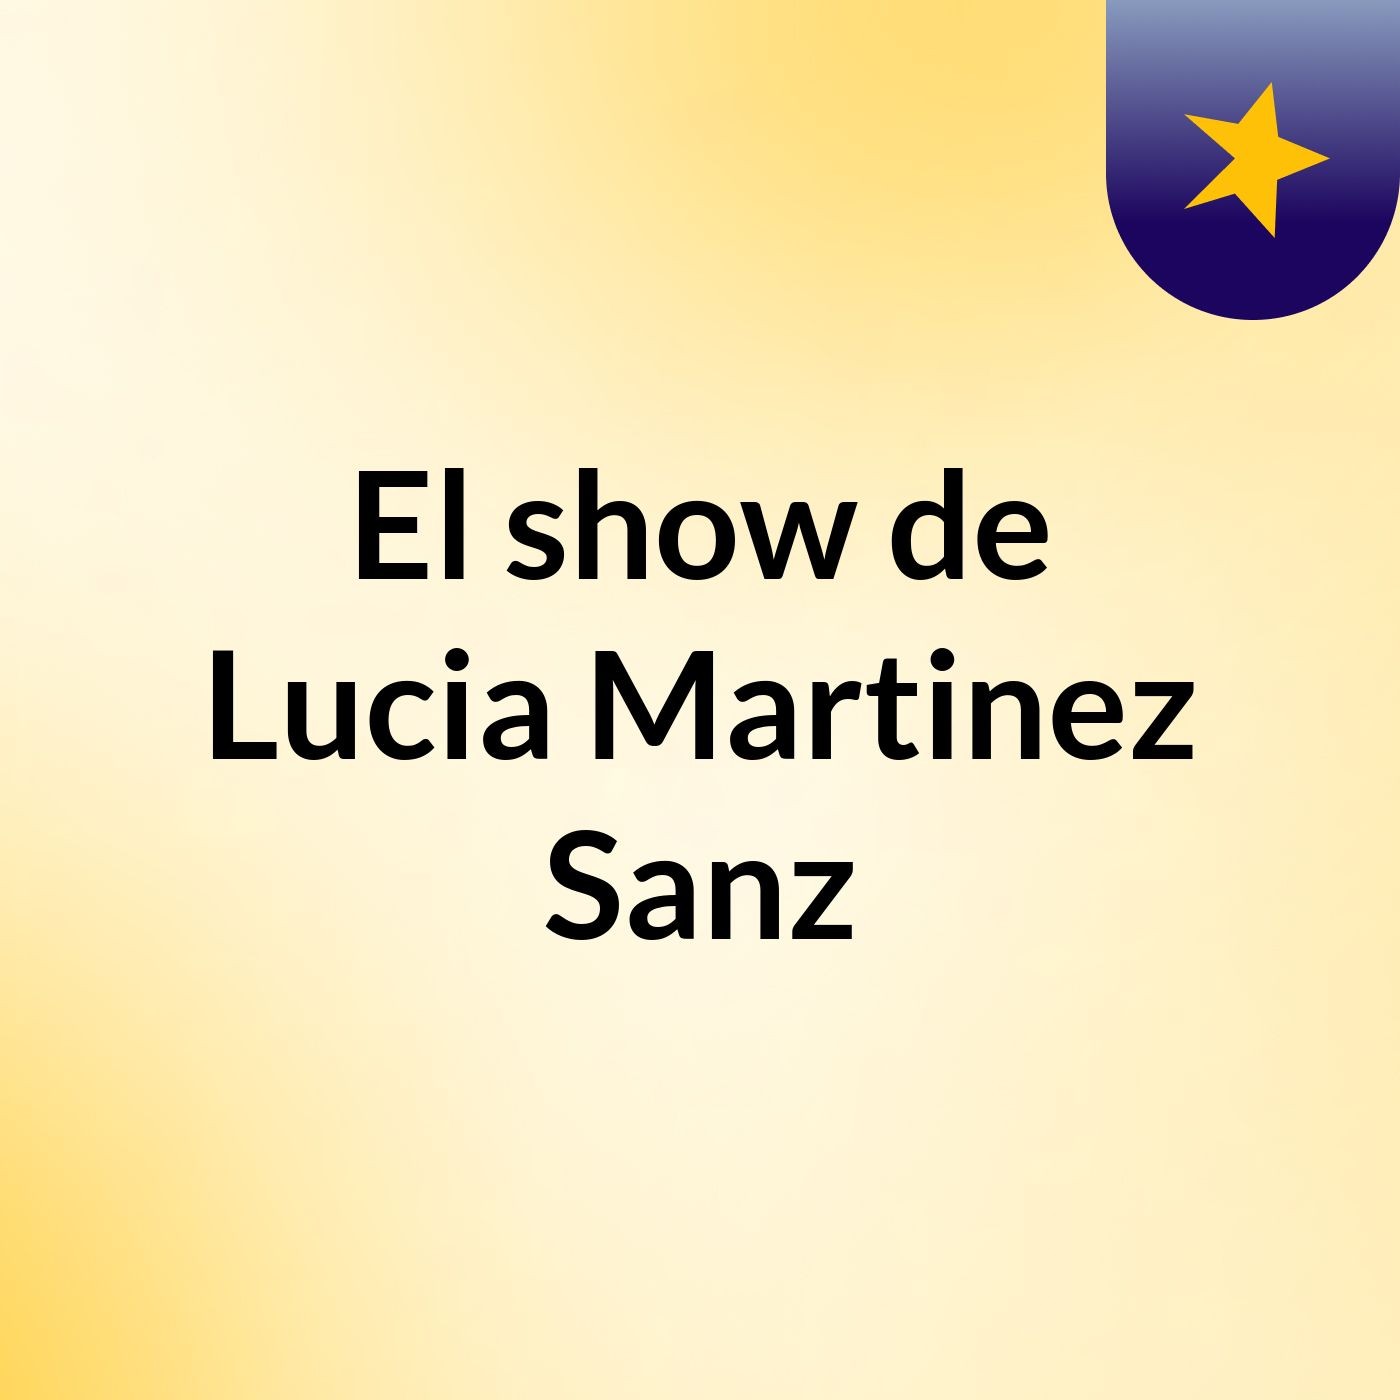 Episodio 1 - El show de Lucia Martinez Sanz